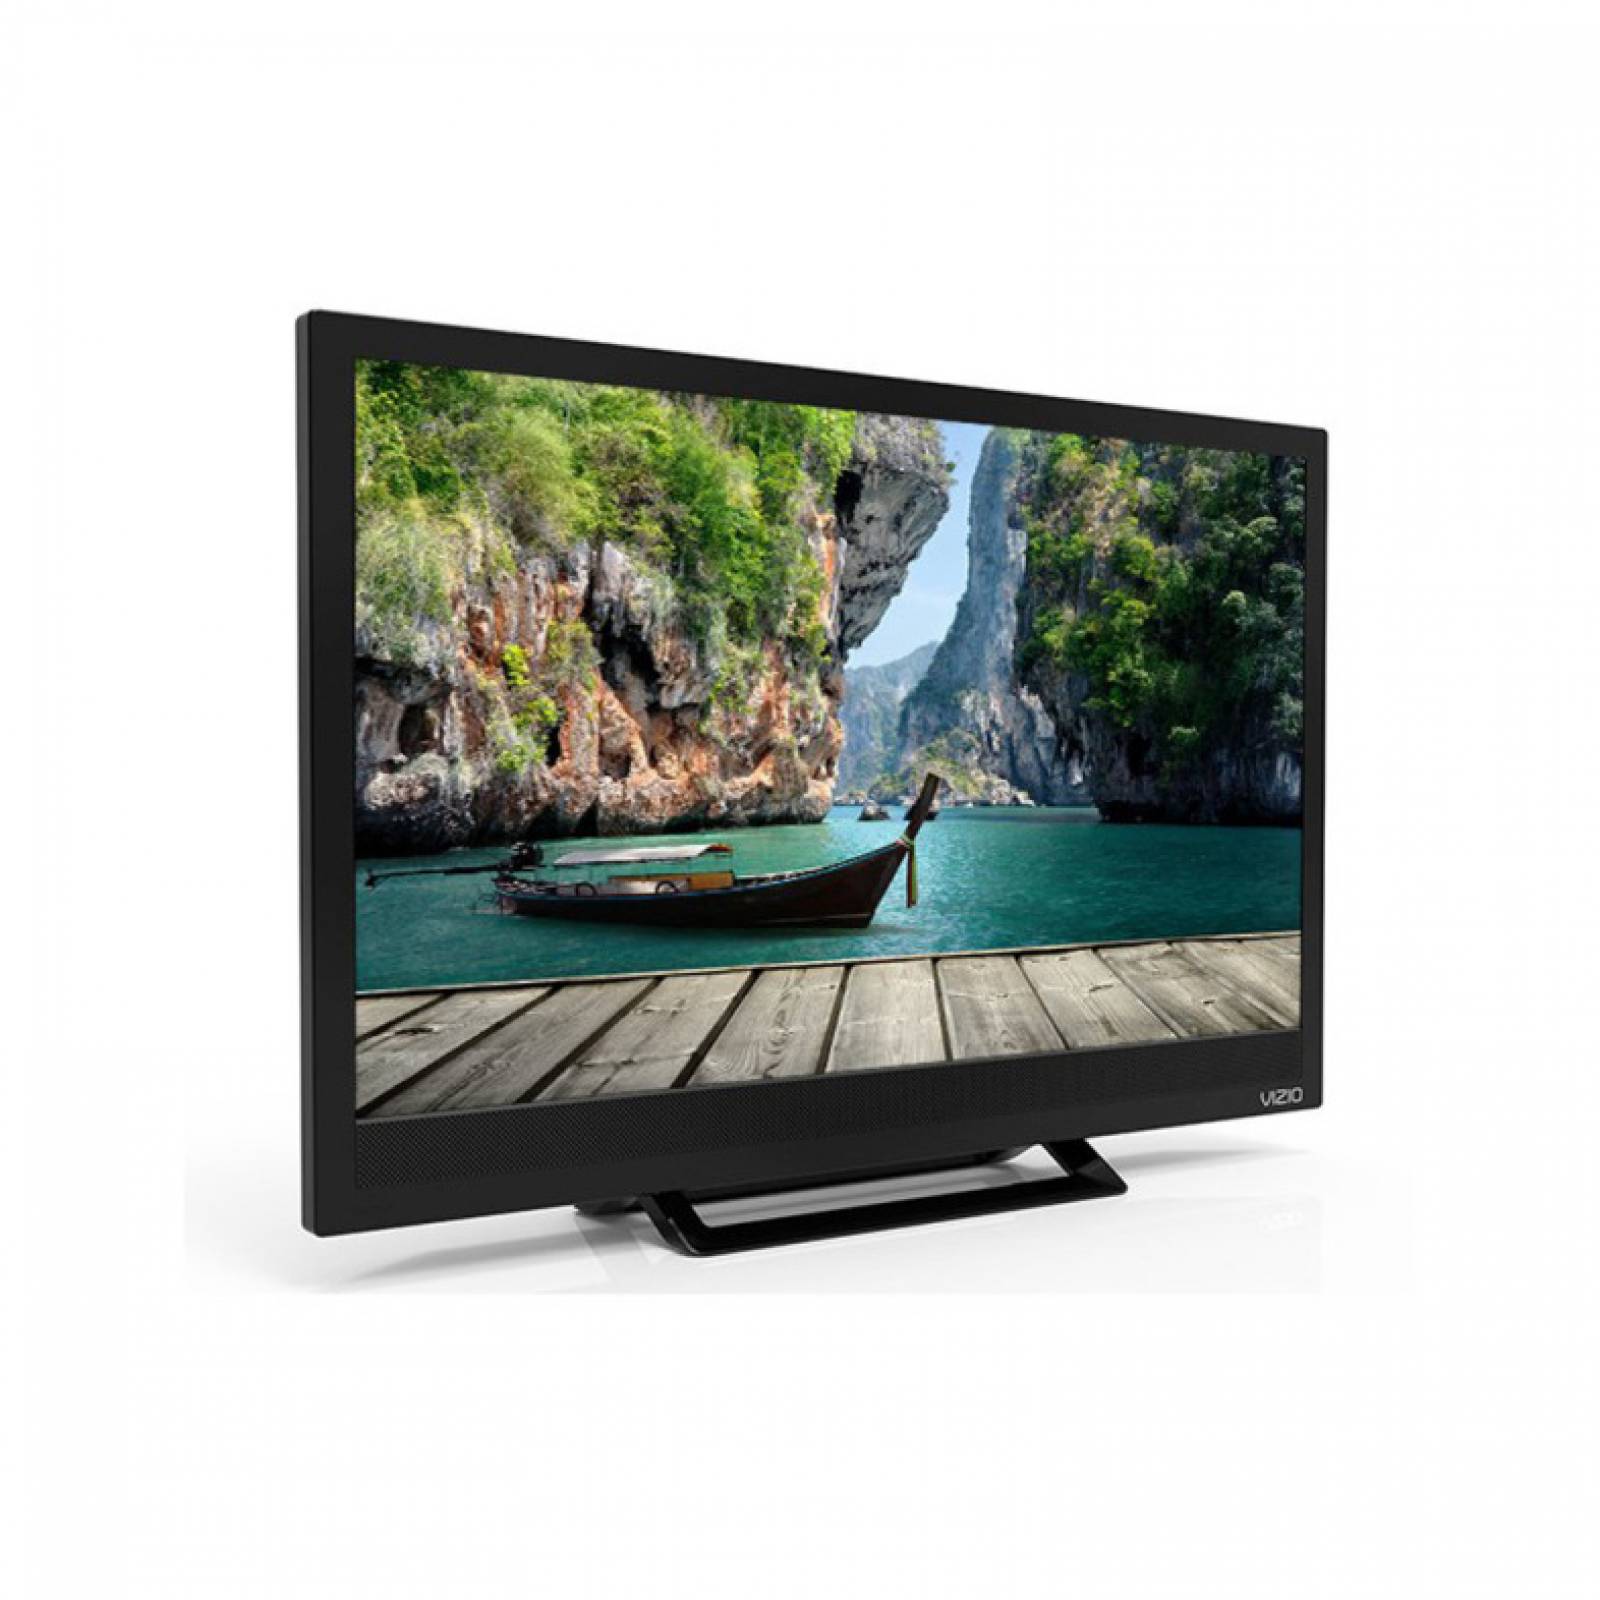 Pantalla TV LCD Led 24 Pulg D24HN Negro Reacondicionado